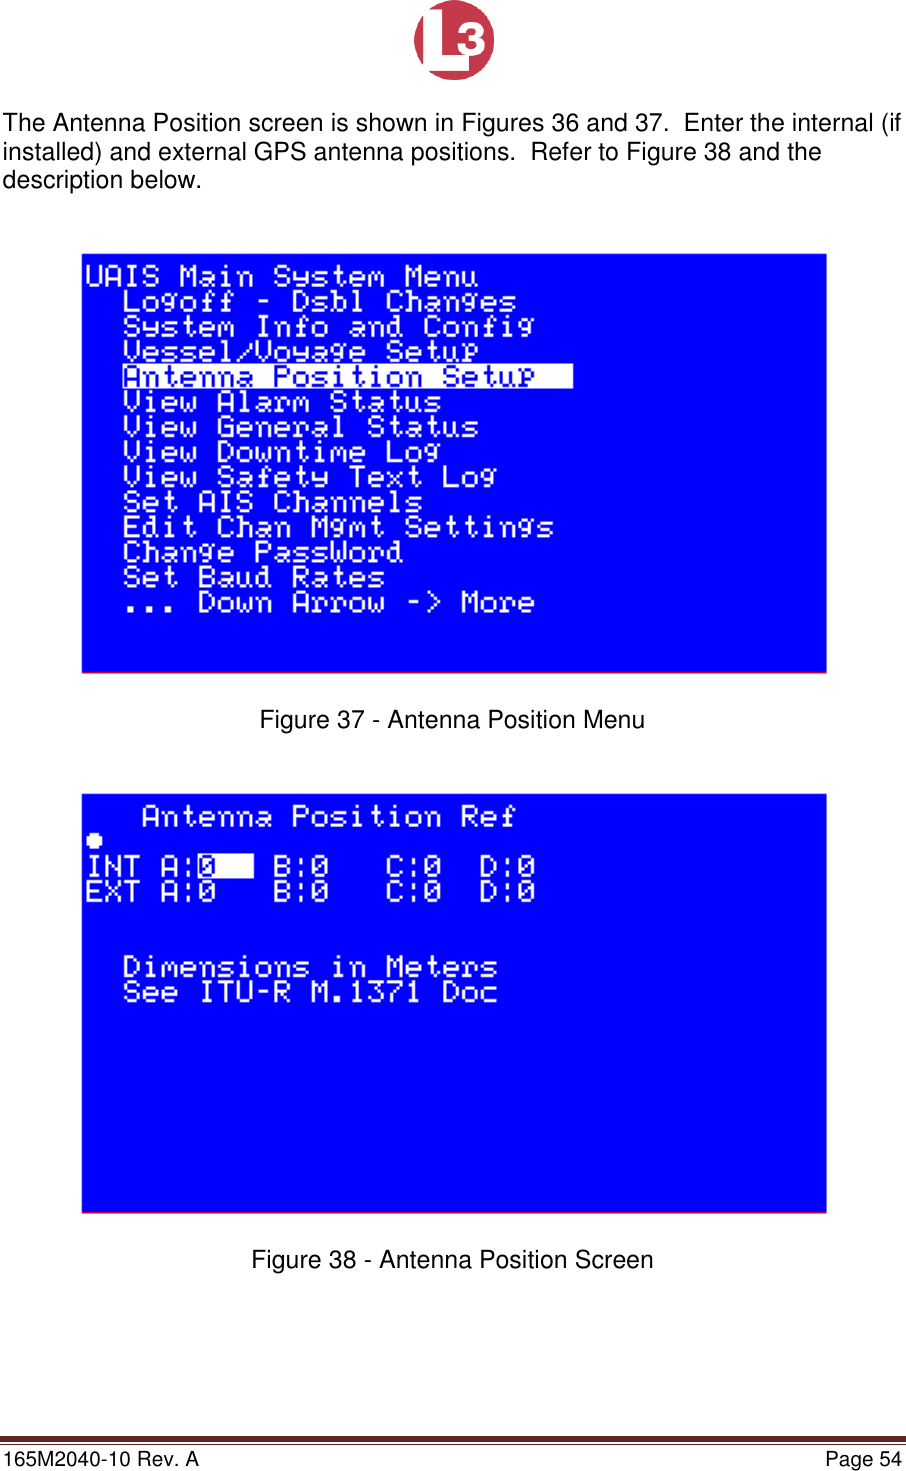 Page 54 of L3 Technologies AISA6 Shipboard Mobile AIS User Manual Memory Verification Procedure